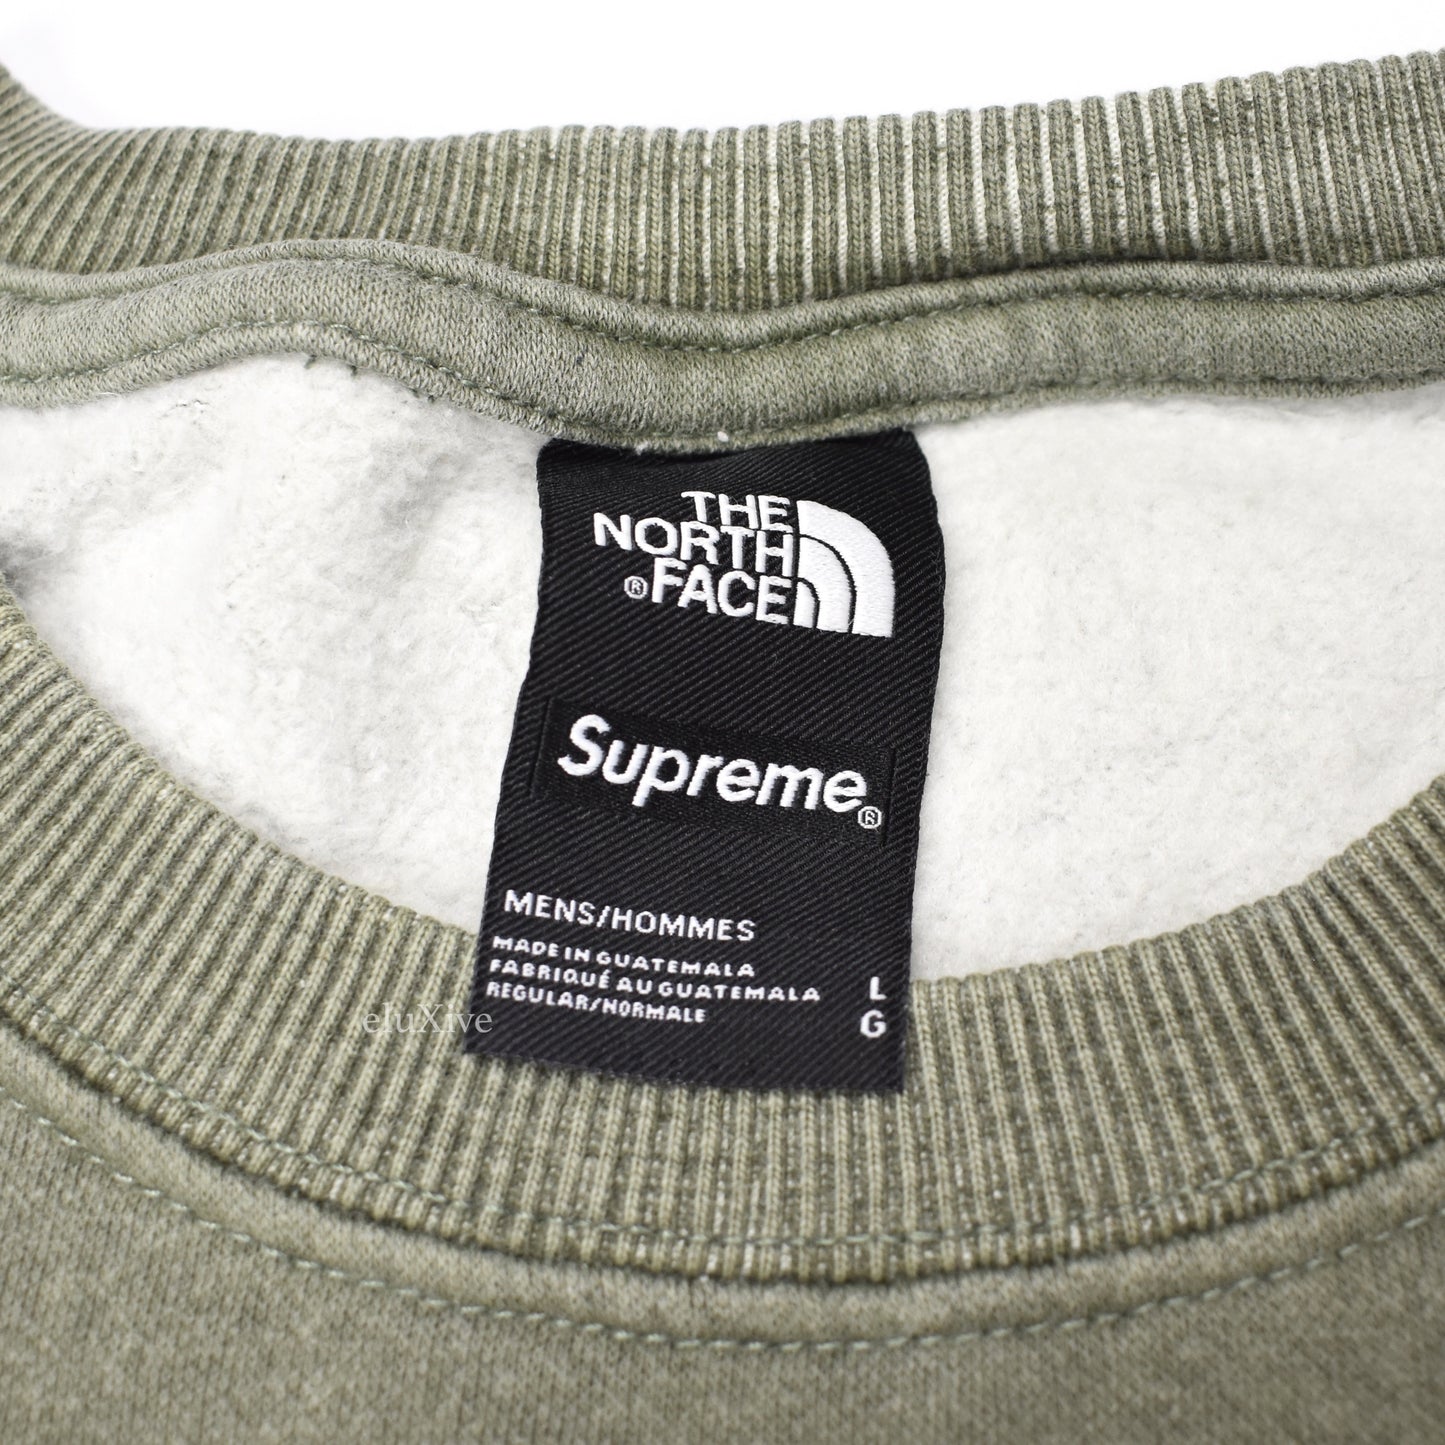 Supreme x The North Face - Pigment Print Logo Sweatshirt (Olive)